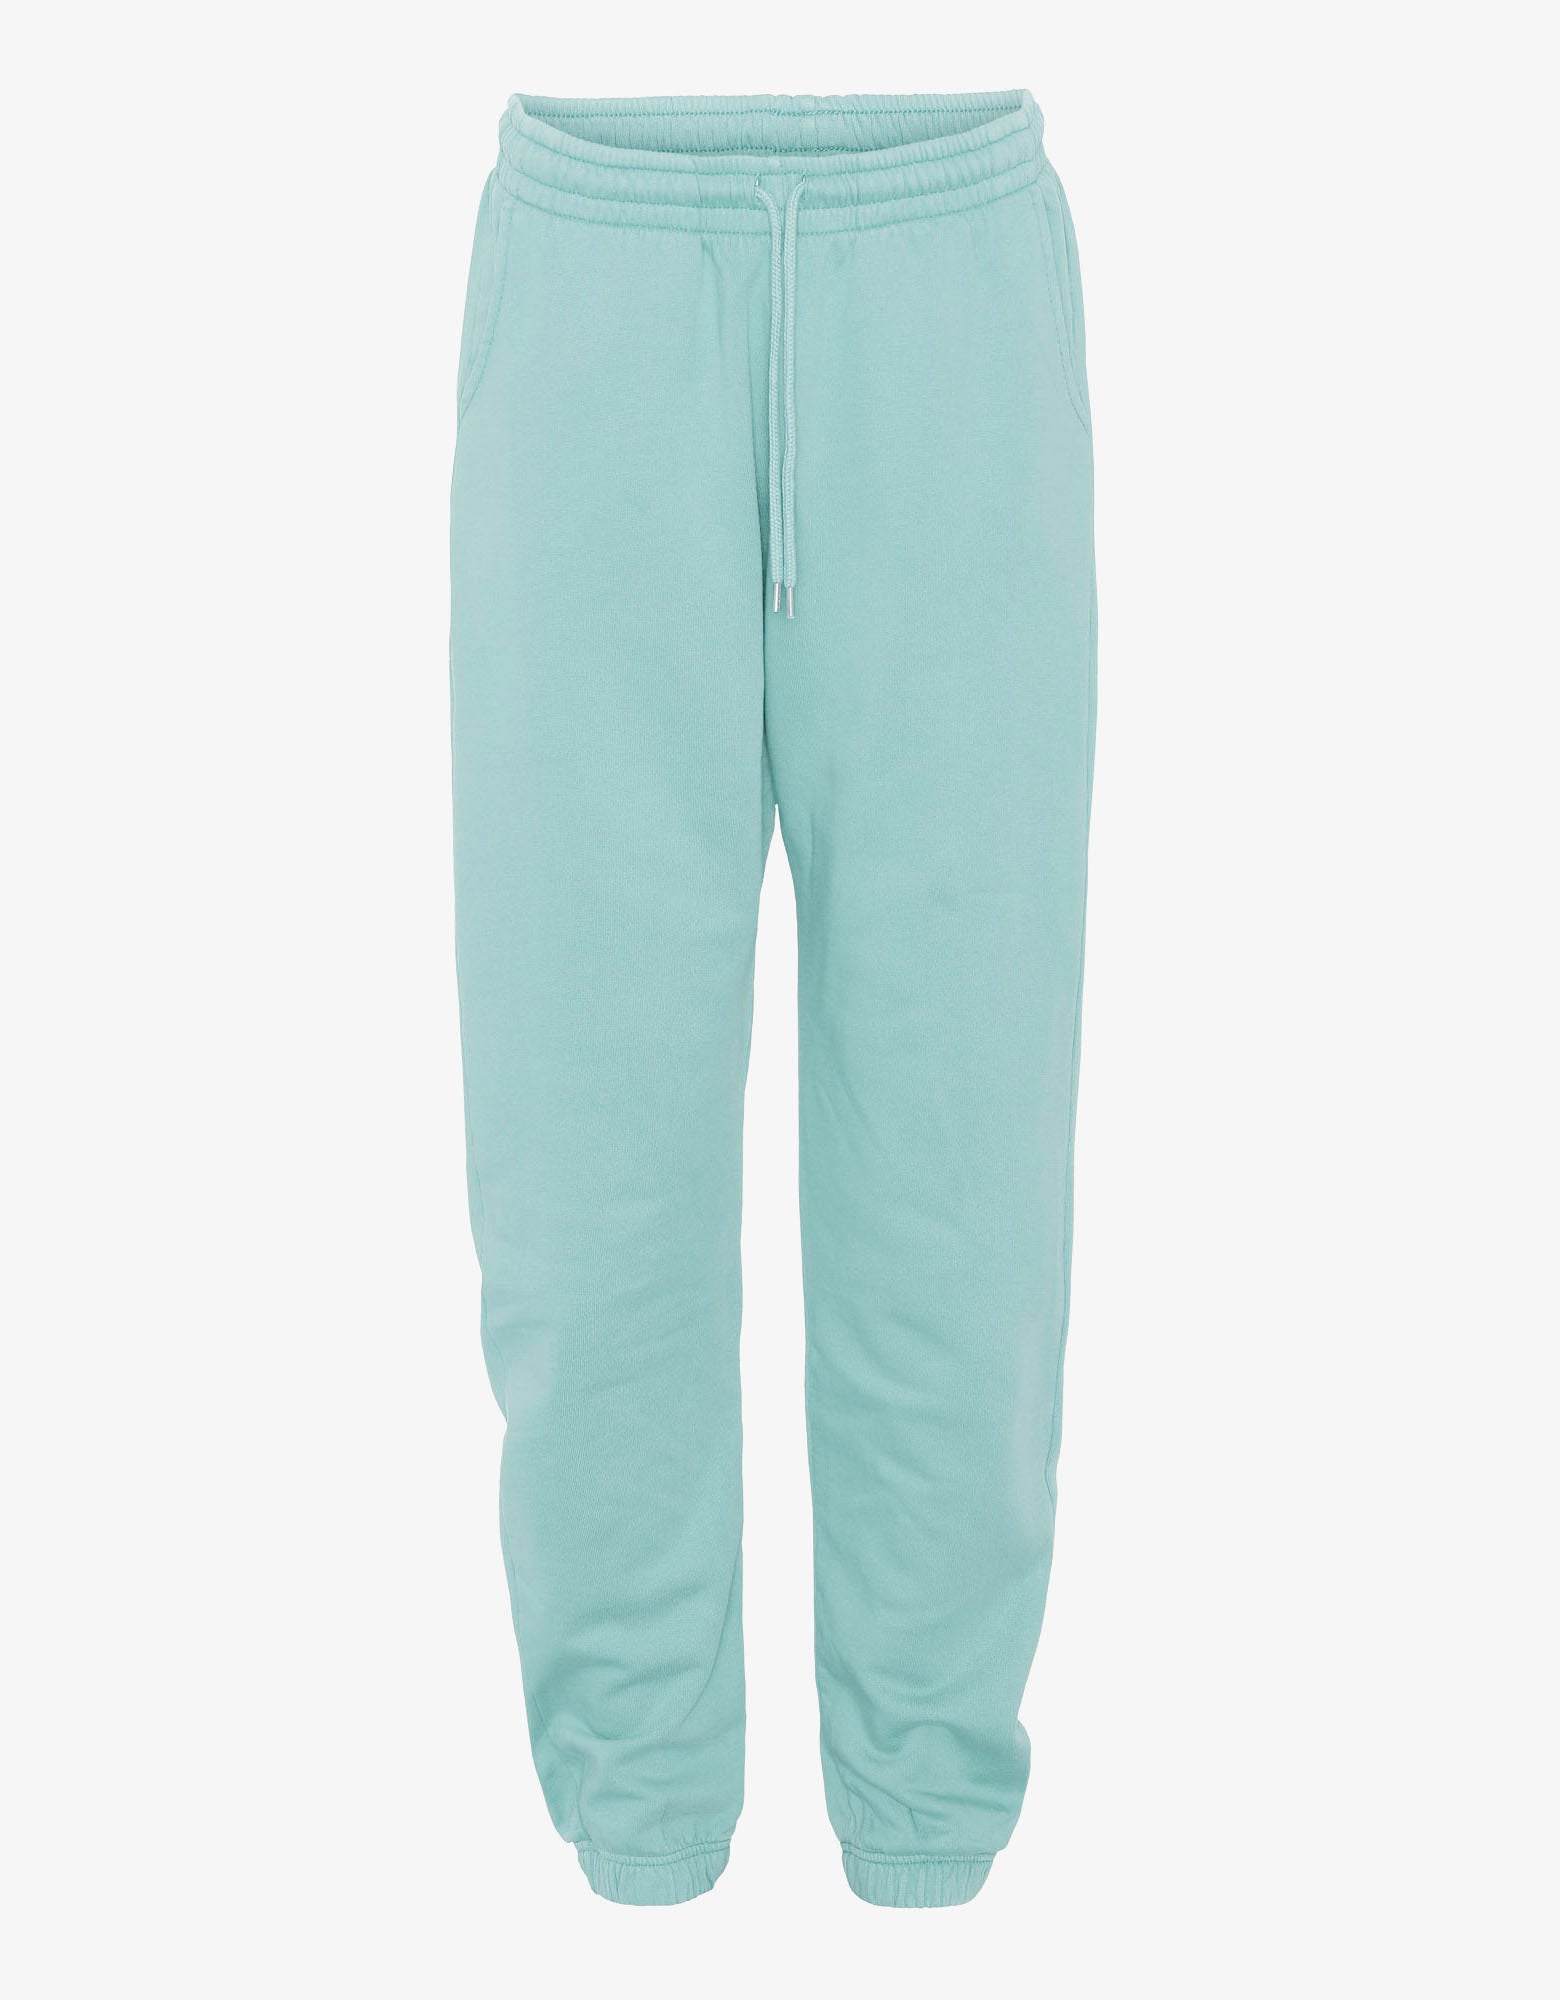 Colorful Standard Organic Sweatpants Pants Teal Blue